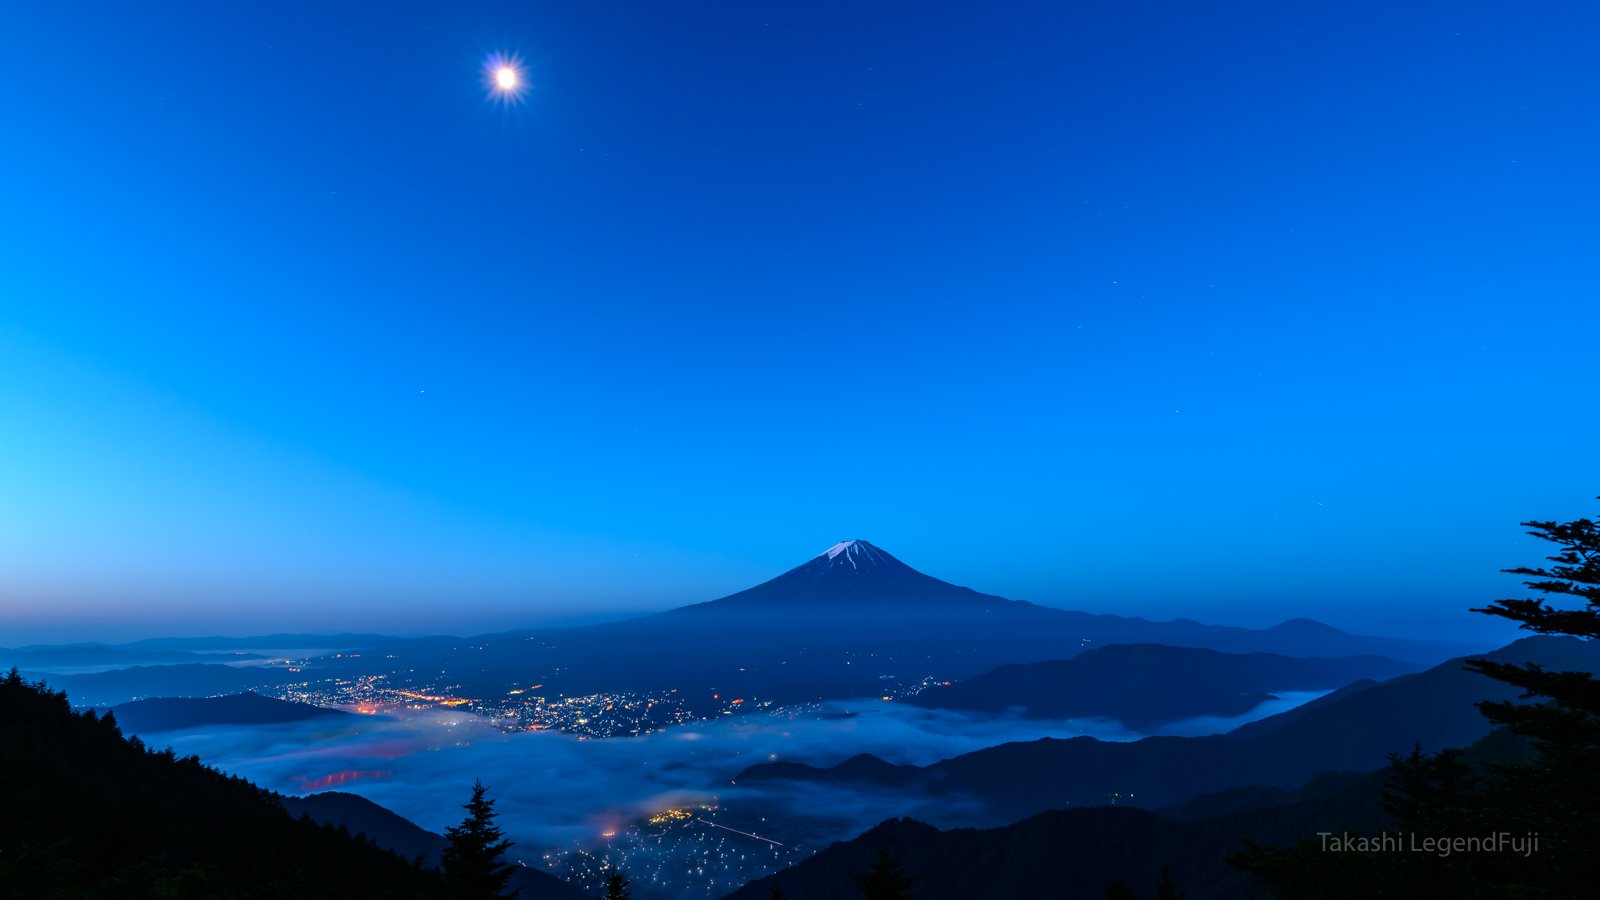 Fuji,mountain,Japan,cloud,moon,luna,sky,blue,lake,light,, Takashi